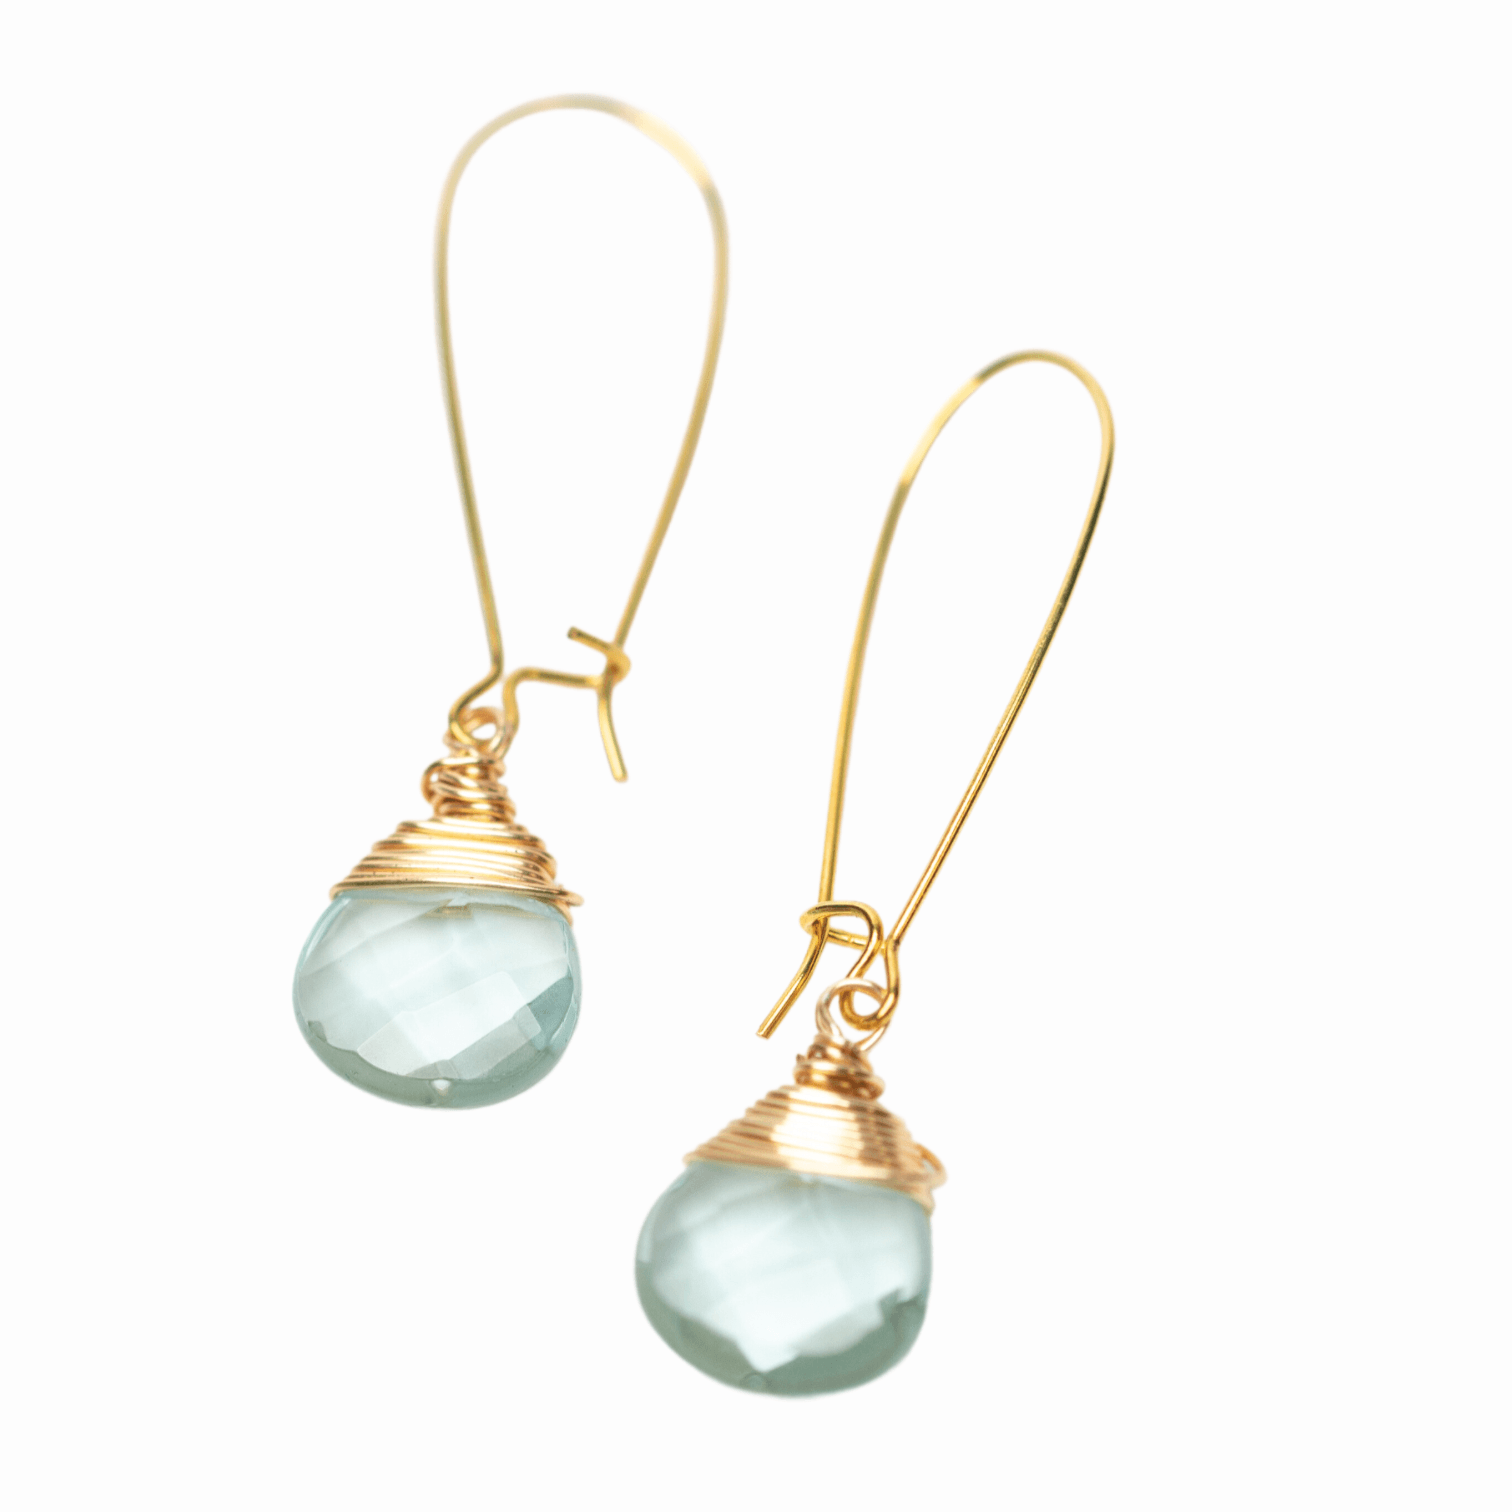 Aqua Quartz Teardrop Earrings in Gold - Forai